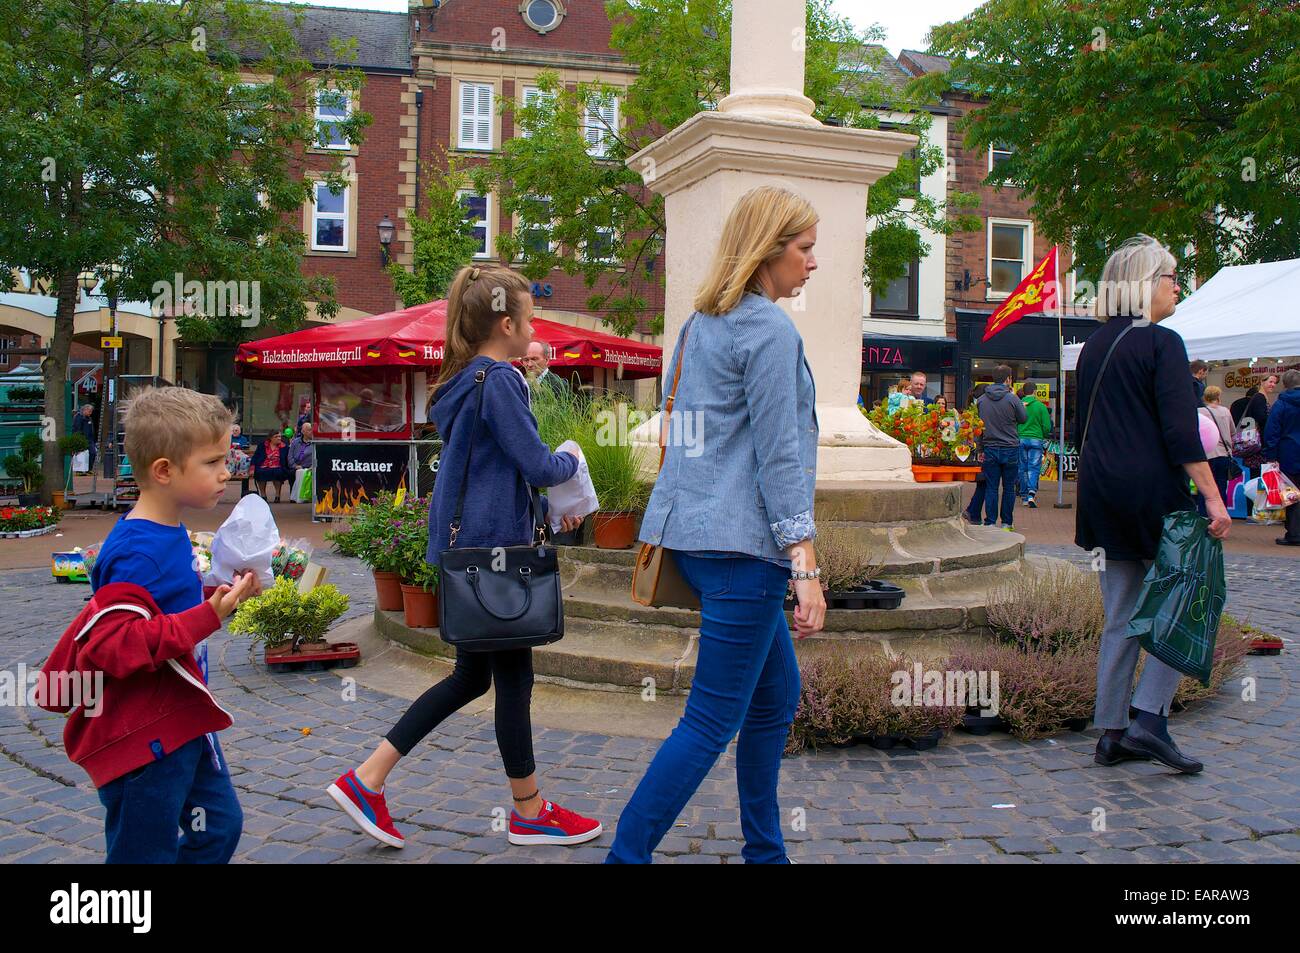 Family walking through Carlisle Continental Market. Carlisle Town Centre, Carlisle, Cumbria, England, UK. Stock Photo